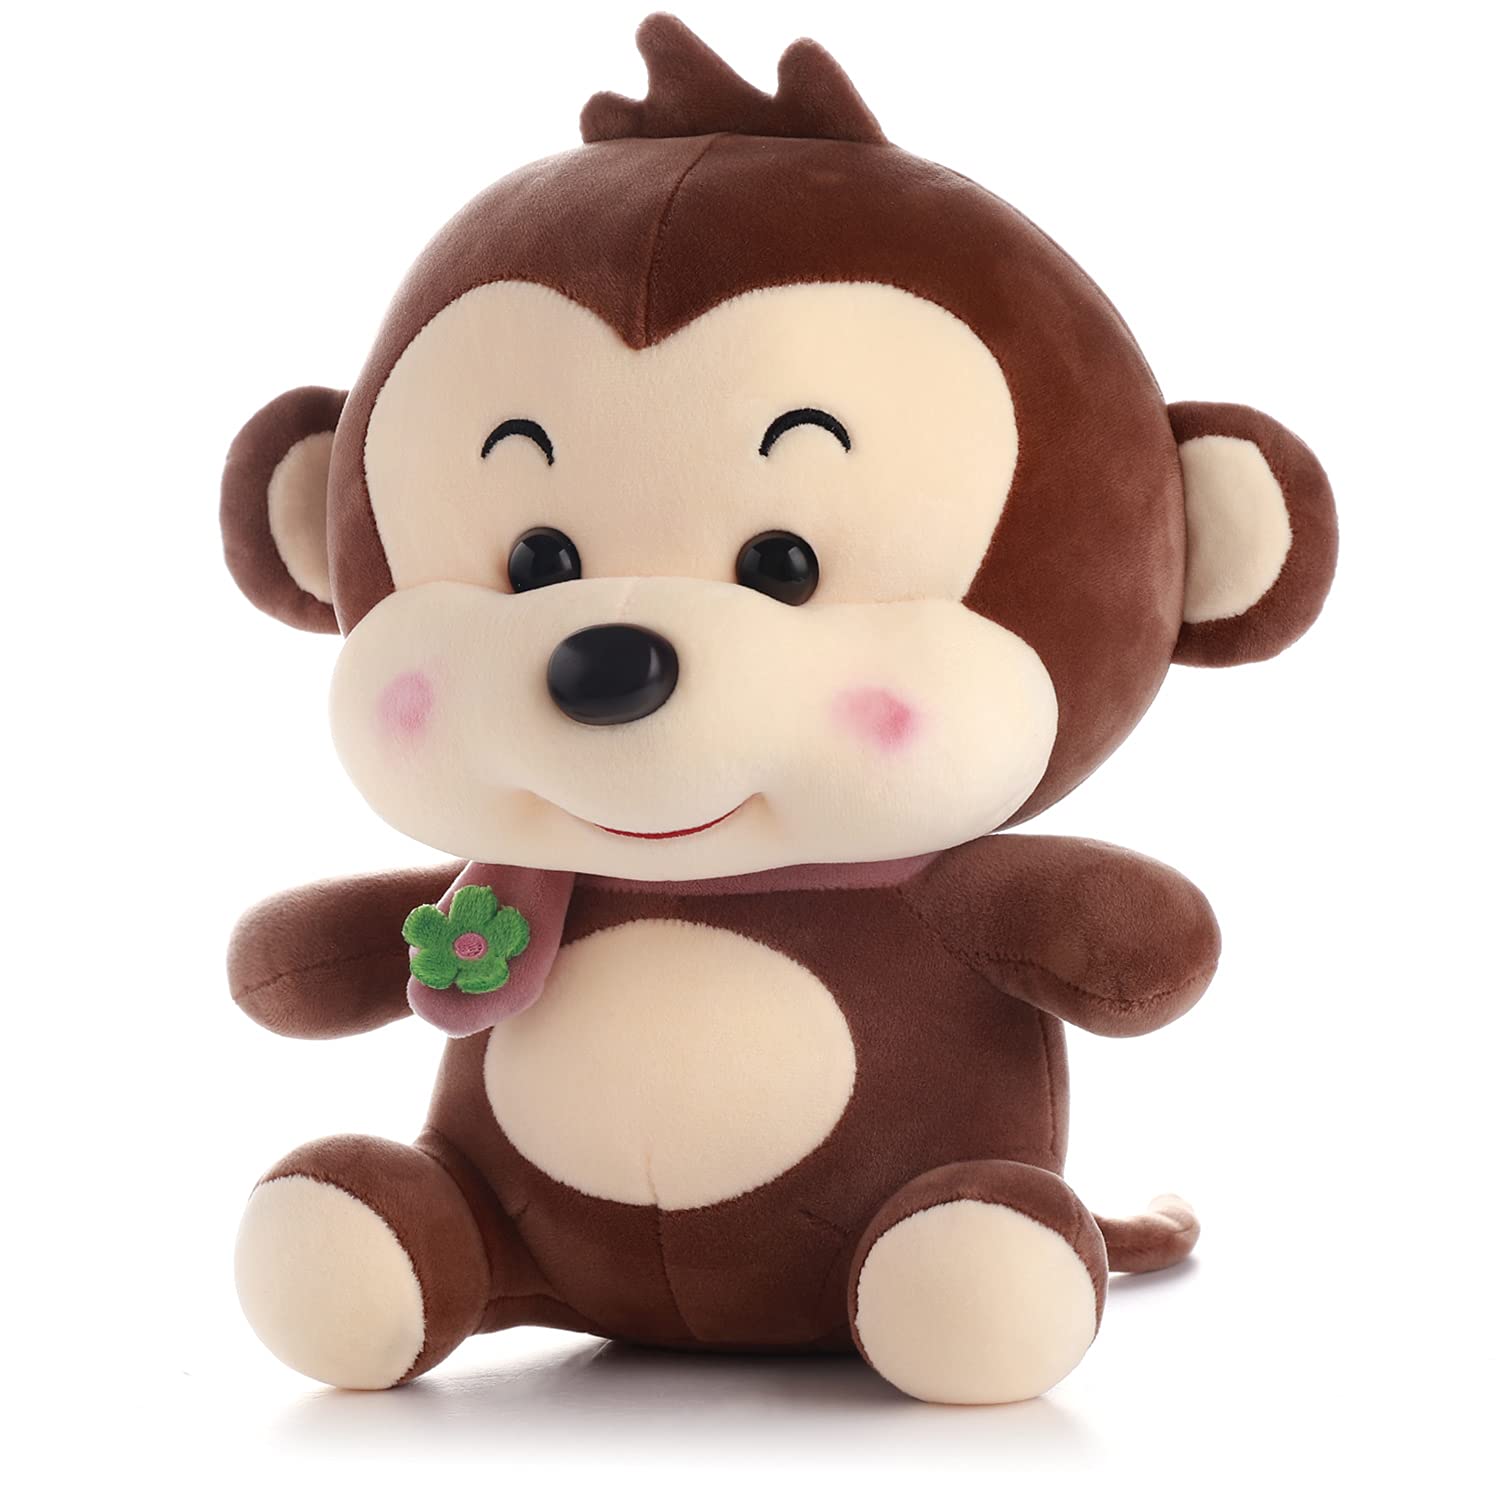 Monkey Plush Toy, 35 cm Big Stuffed Animal Throw Plushie Doll, Soft fluffy Friend Hugging Cushion - Present for Every Age & Occasion